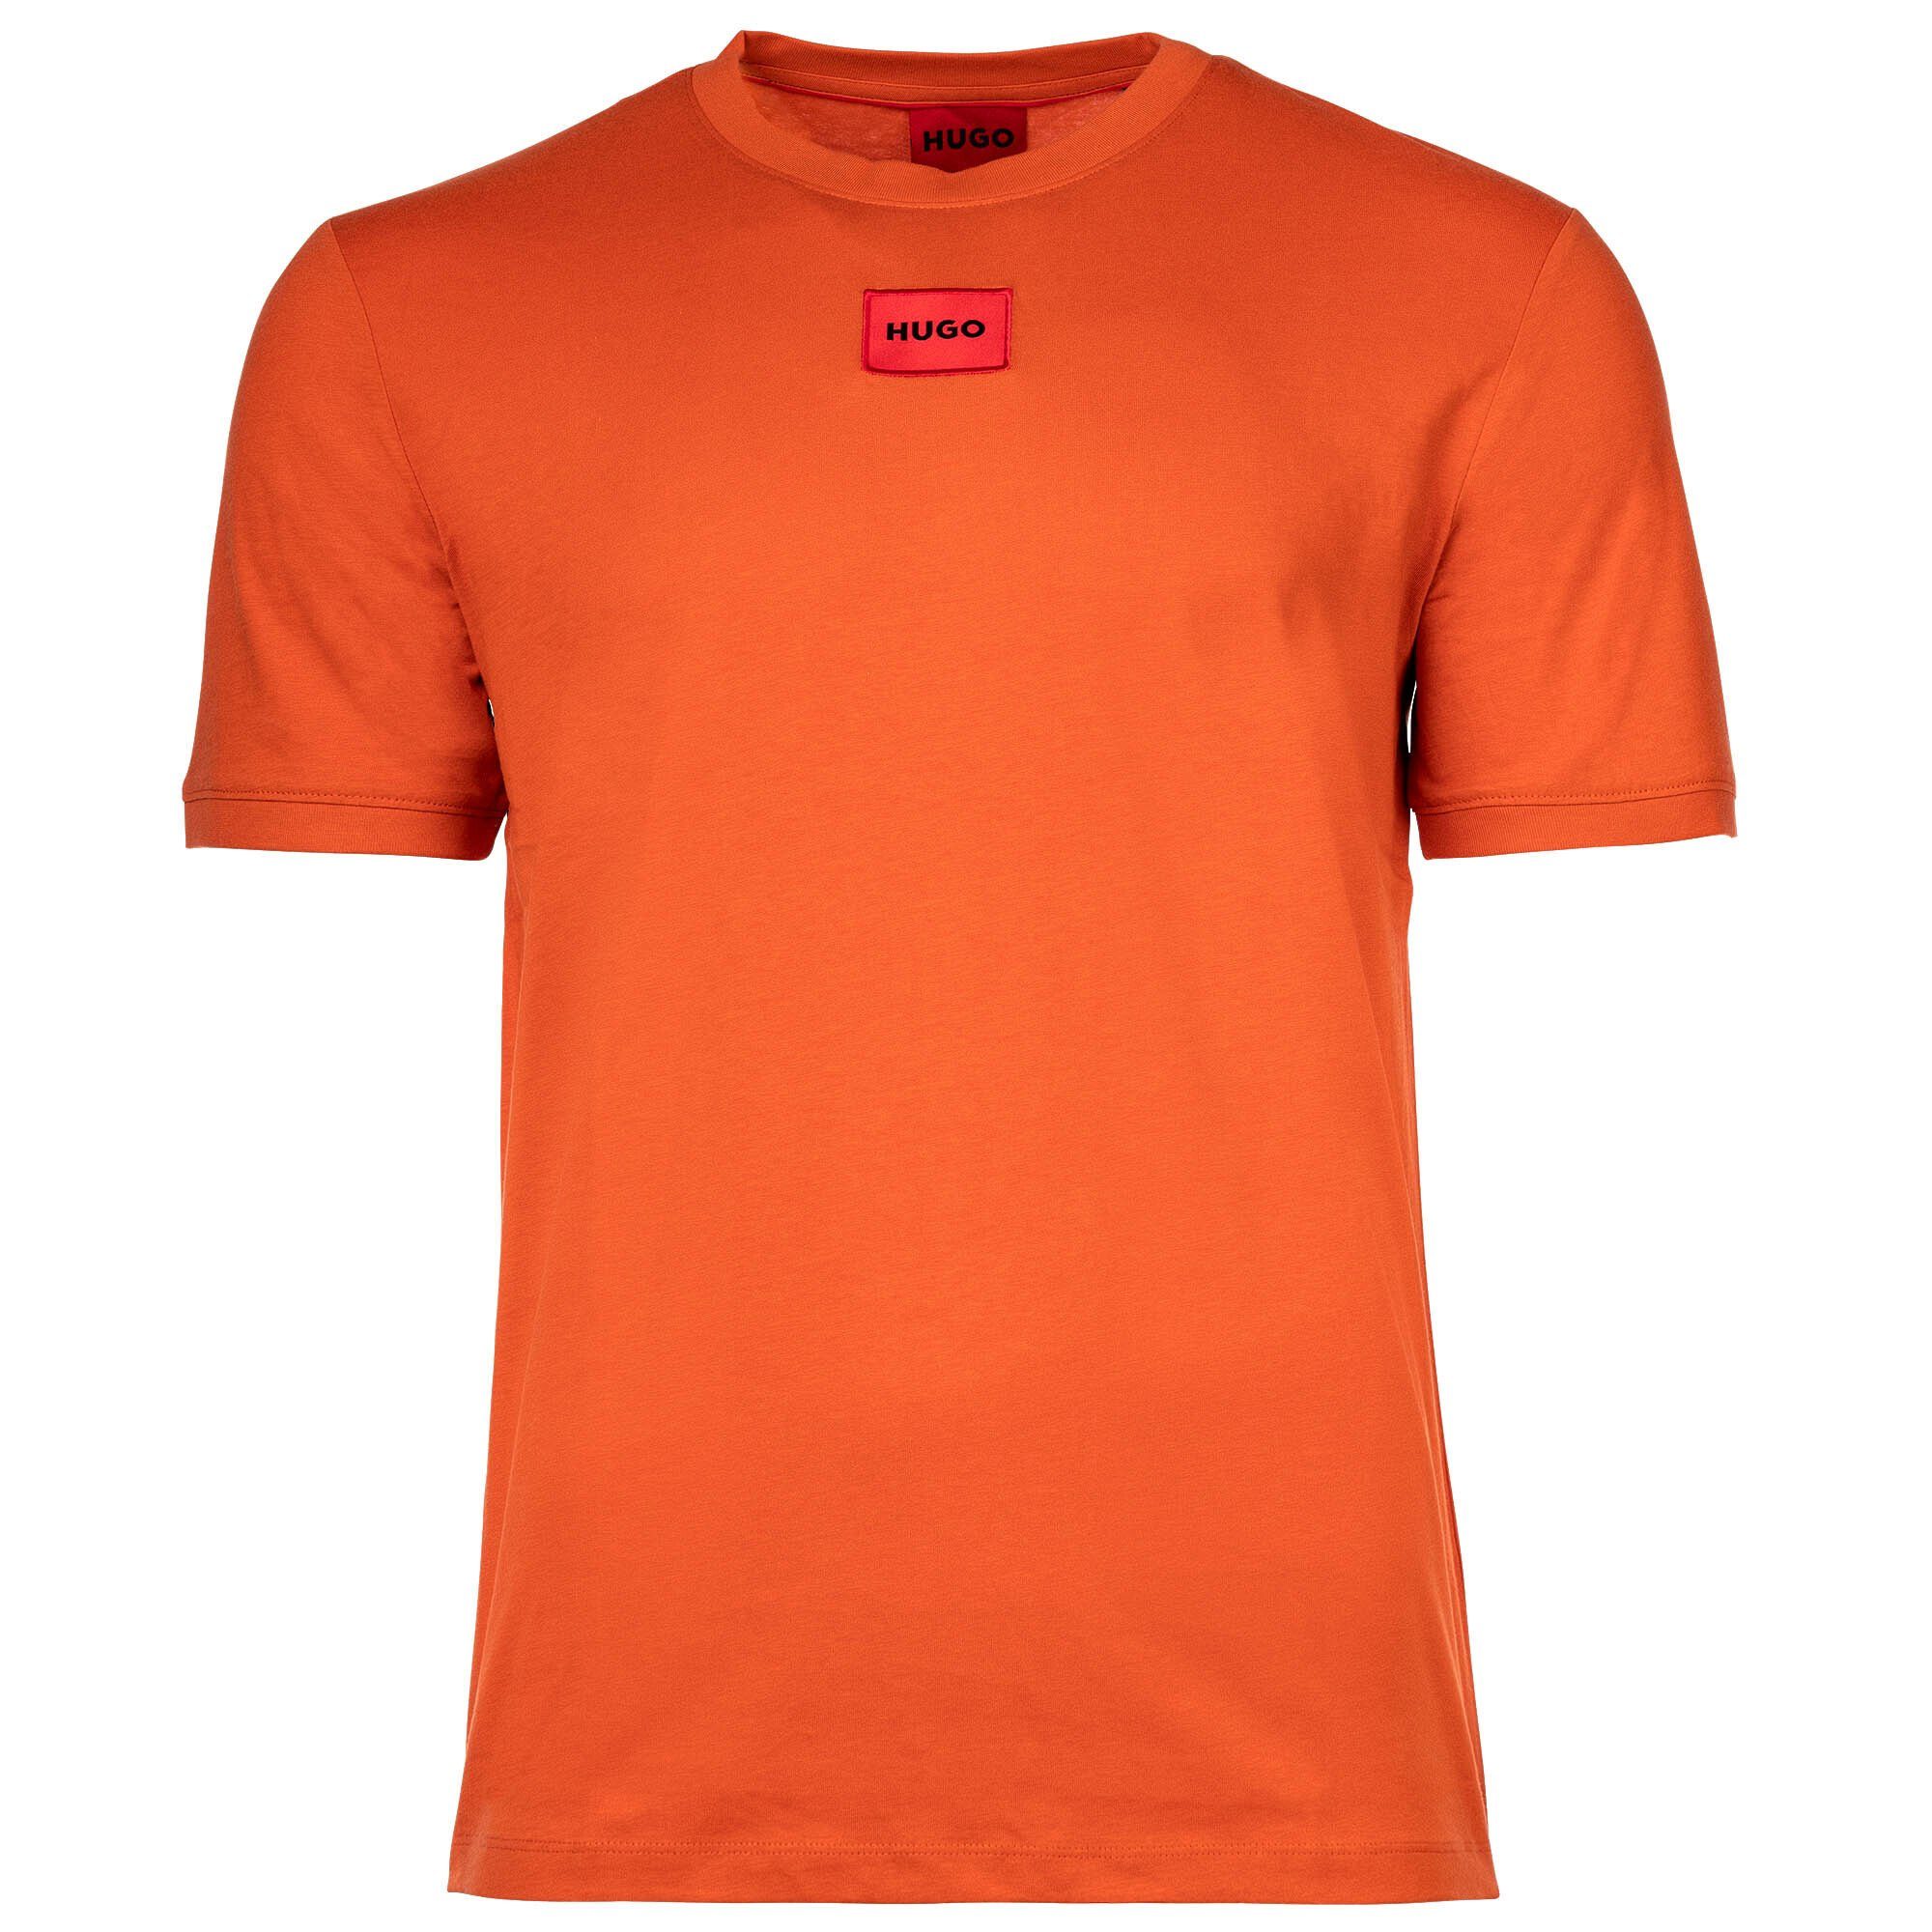 HUGO T-Shirt Herren Orange - Diragolino212 T-Shirt Rundhals